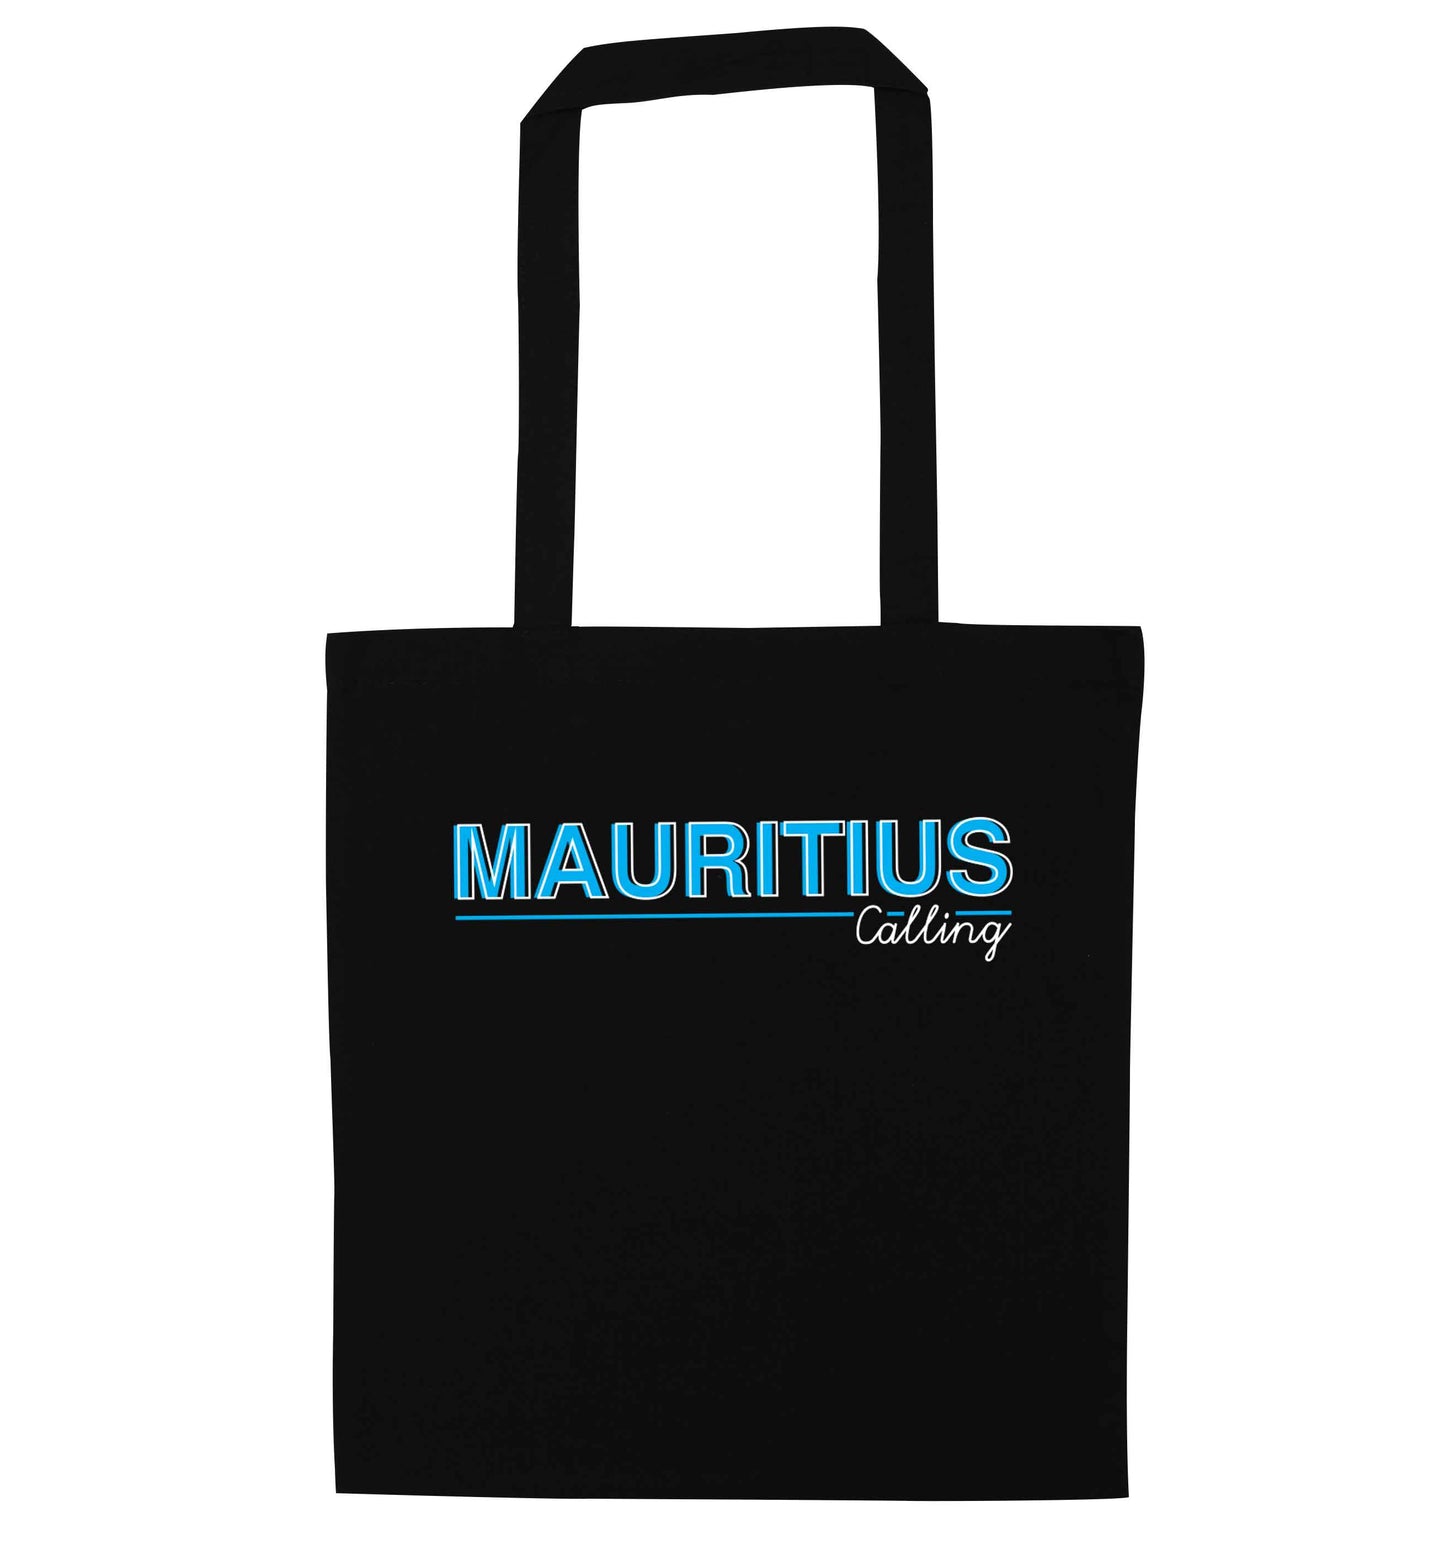 Mauritius calling black tote bag